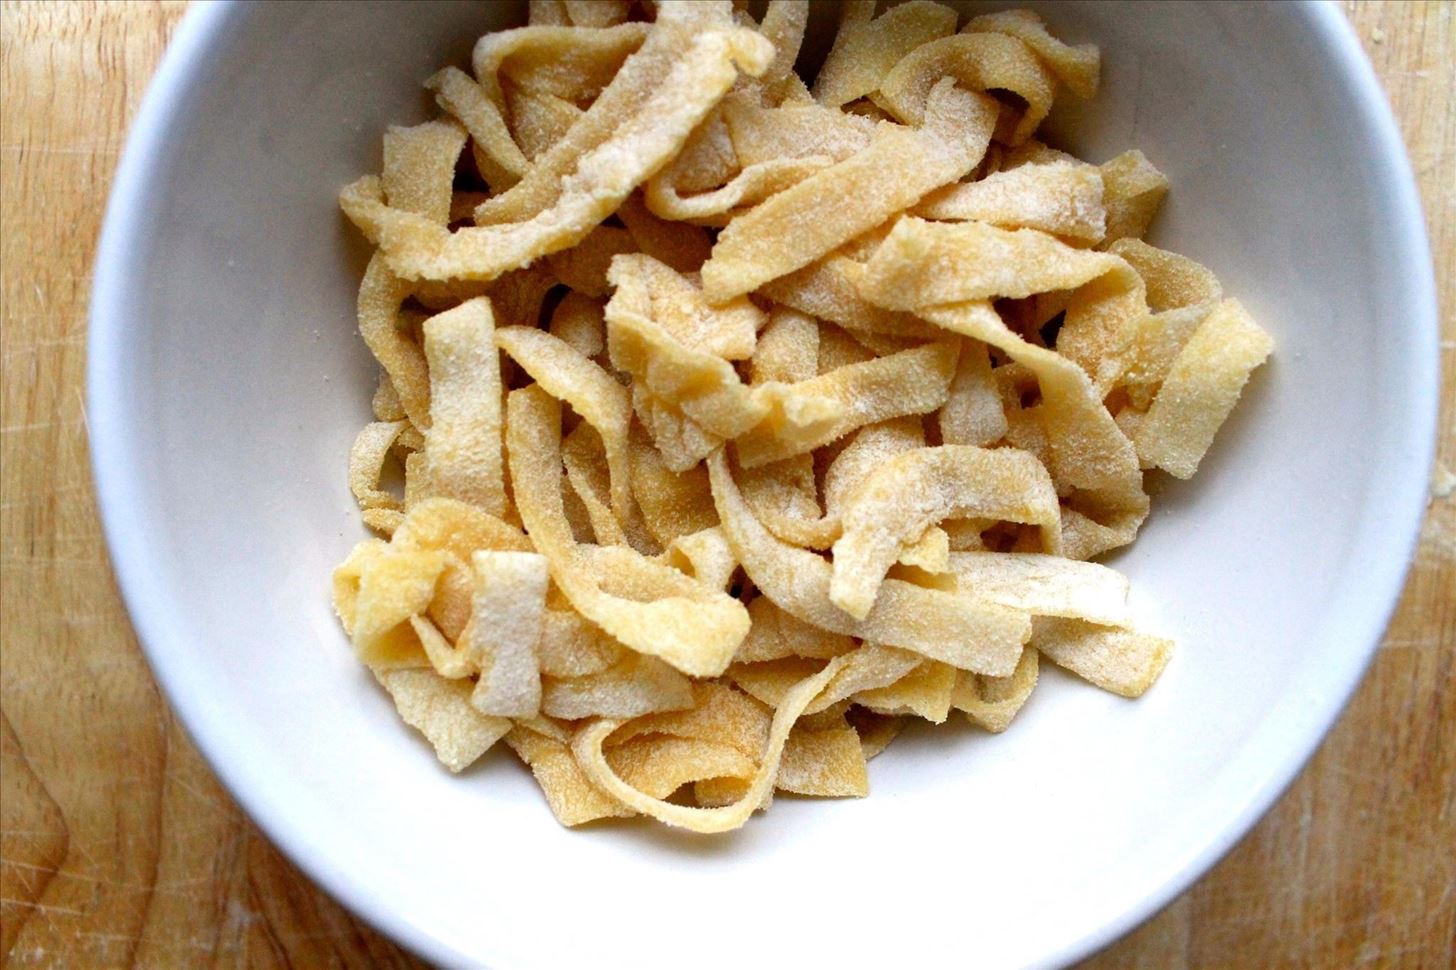 No Pasta Maker? Use Your Paper Shredder for Homemade Noodles Instead